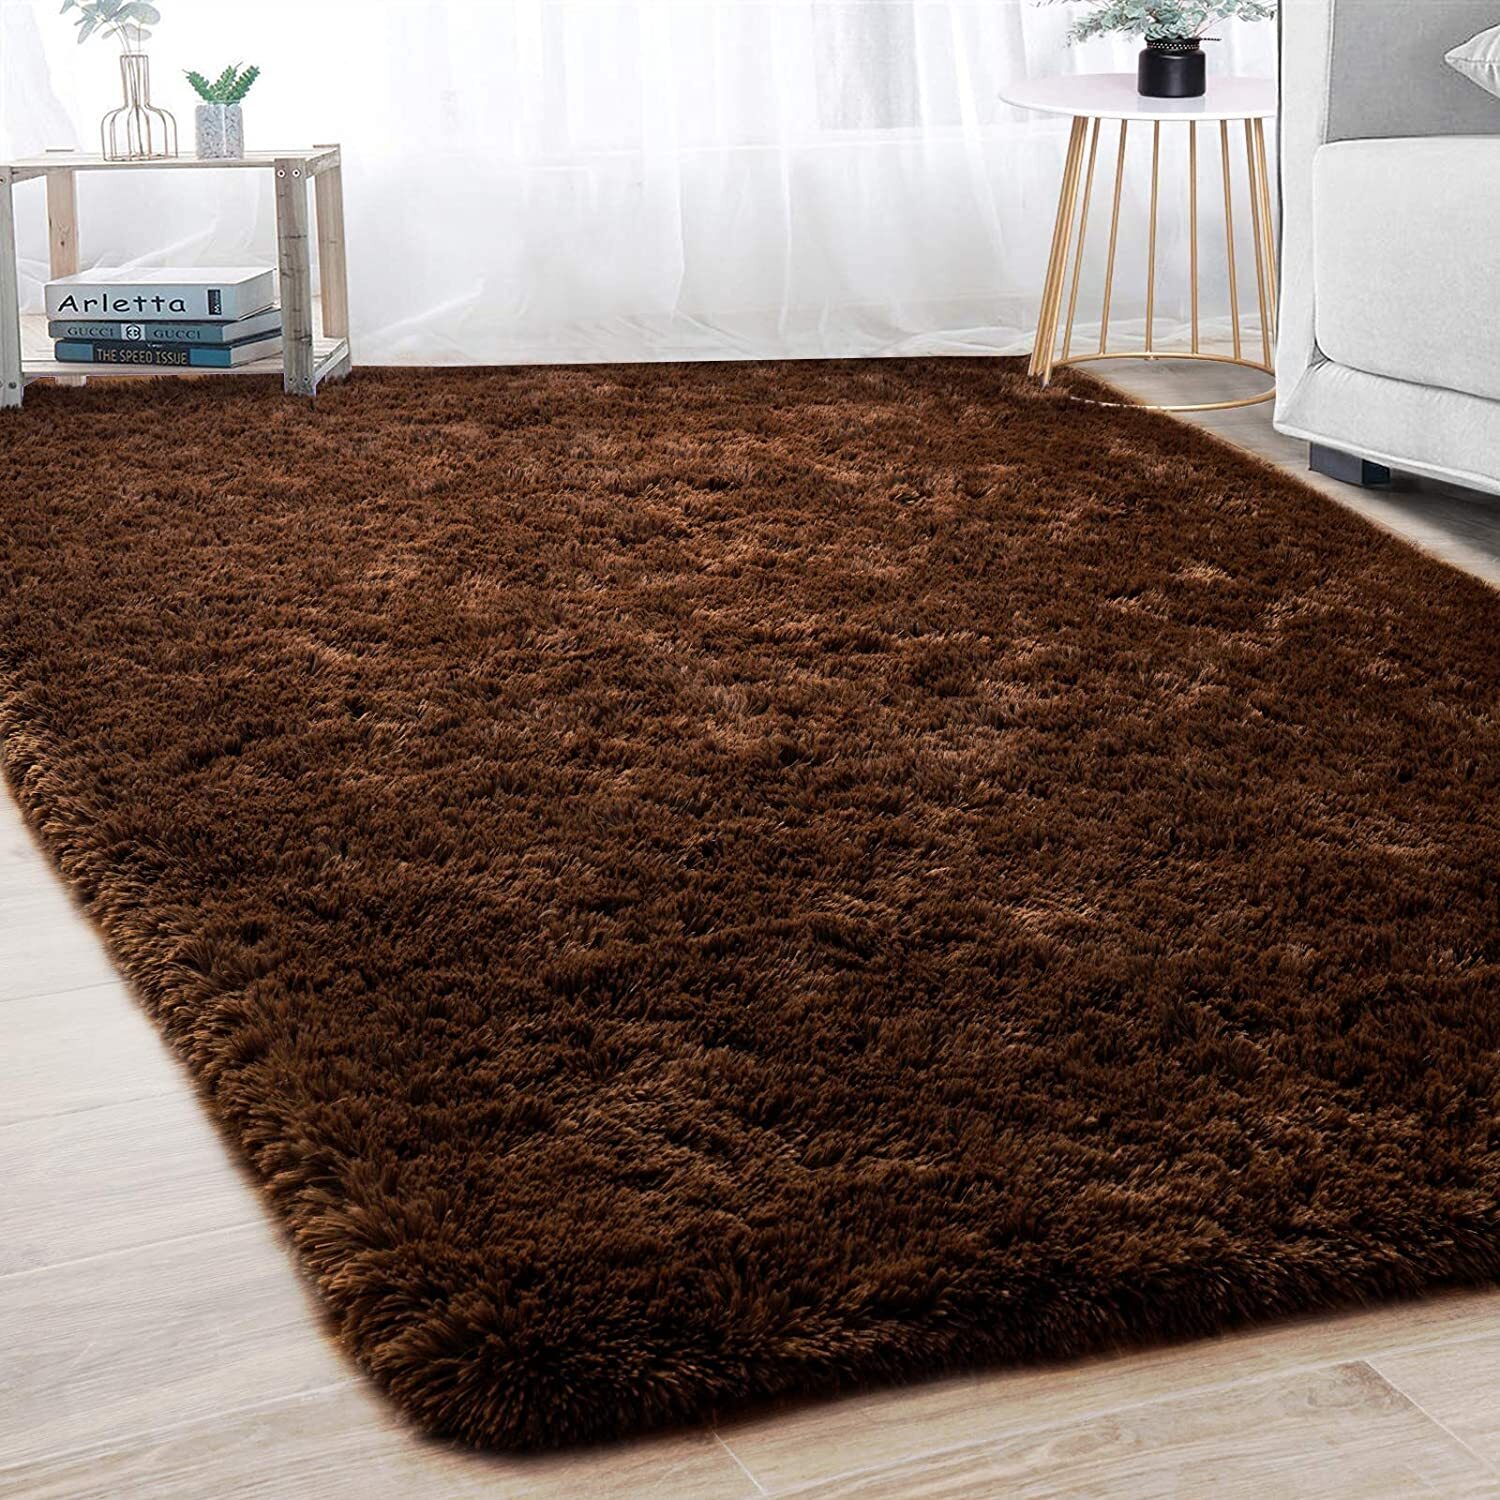 XL Extra Large Soft Shag Rug Carpet Mat (Chocolate, 300 x 200)